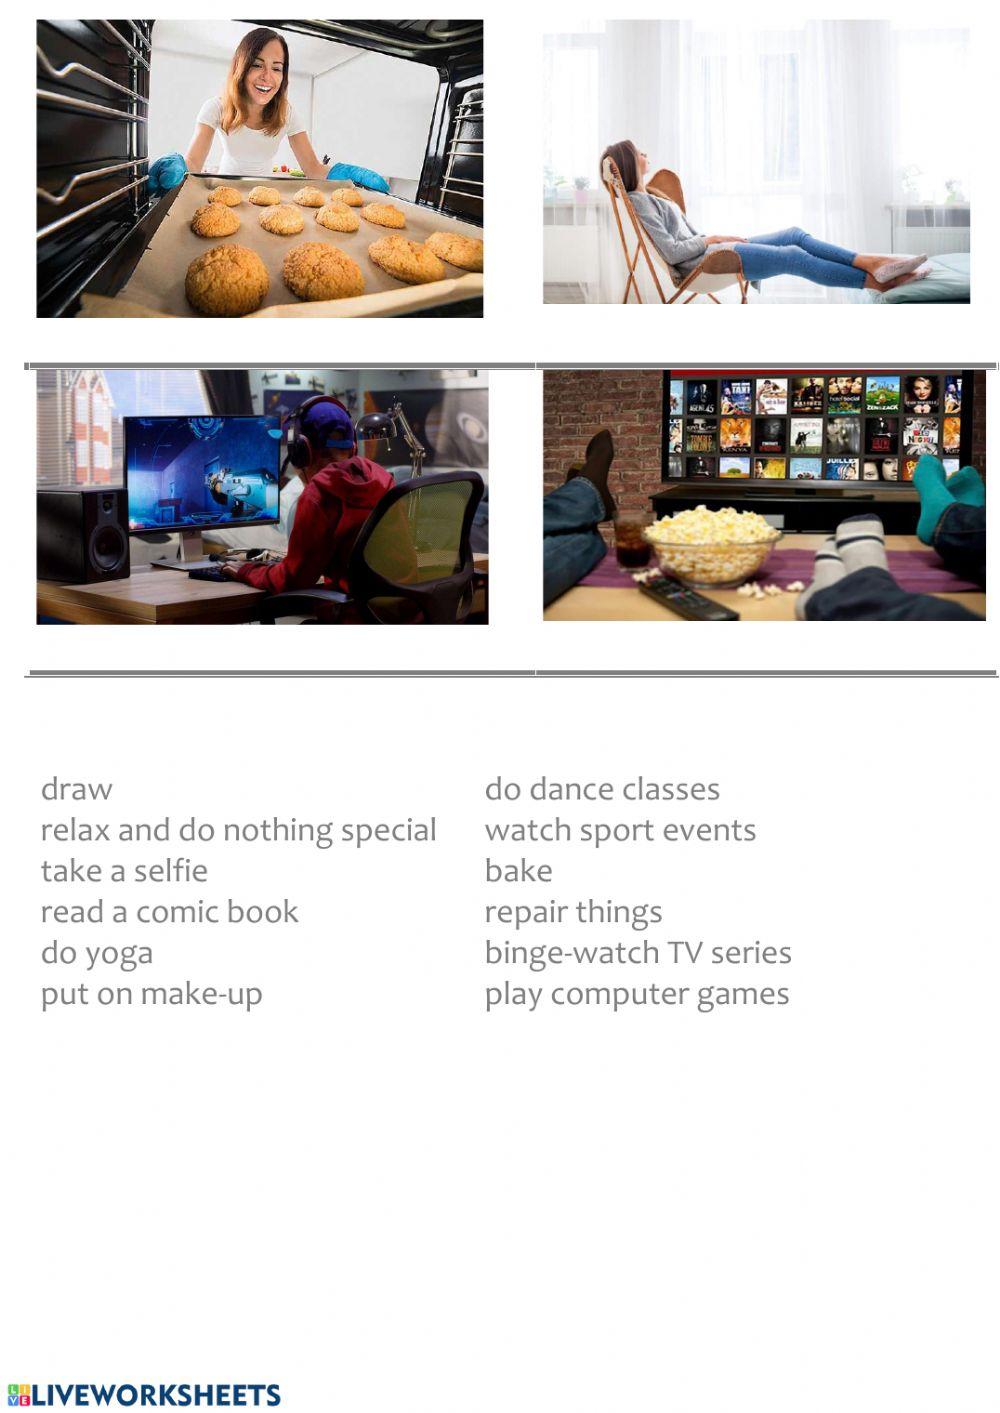 Hobbies and activities match